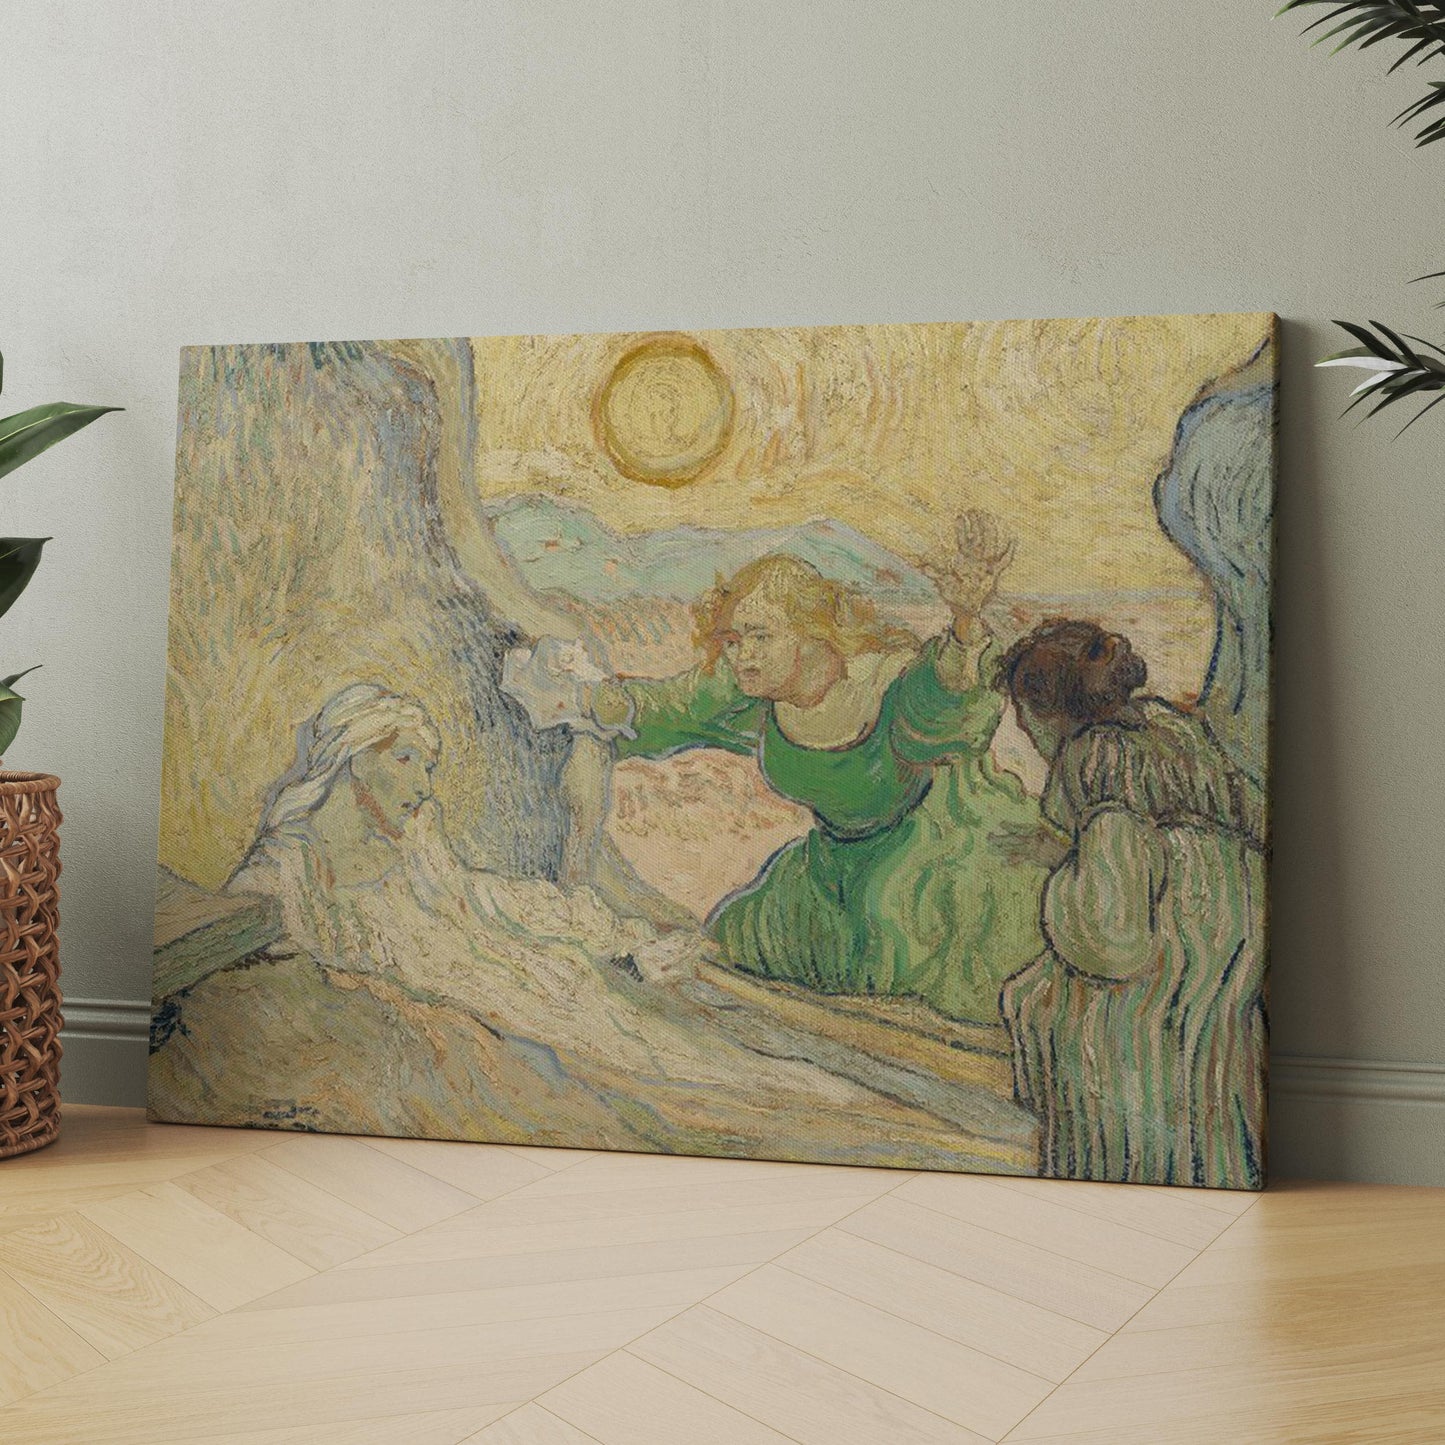 The Raising of Lazarus (1890) by Van Gogh